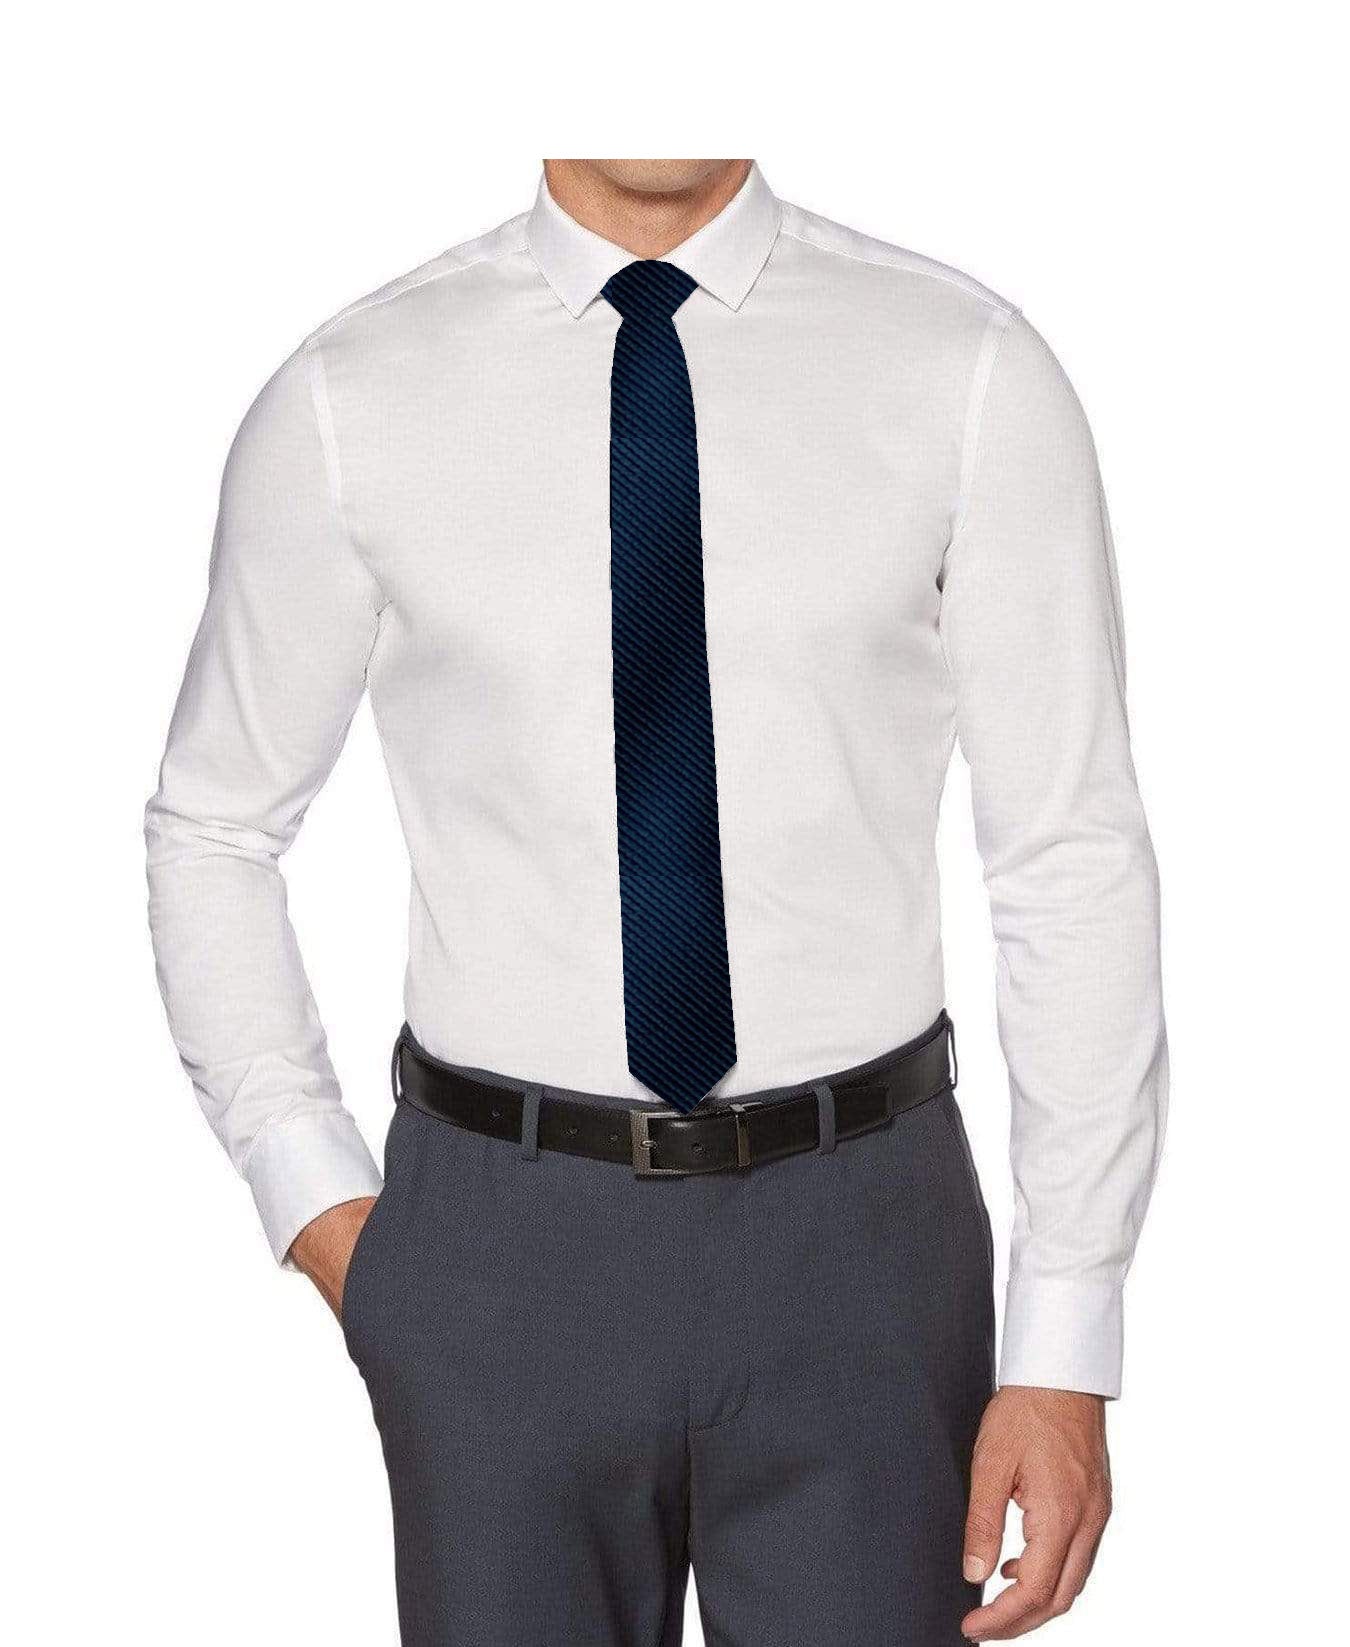 Perry Ellis Boys Dress Shirts w Indigo Tie Solid Shirts w Colored Tie